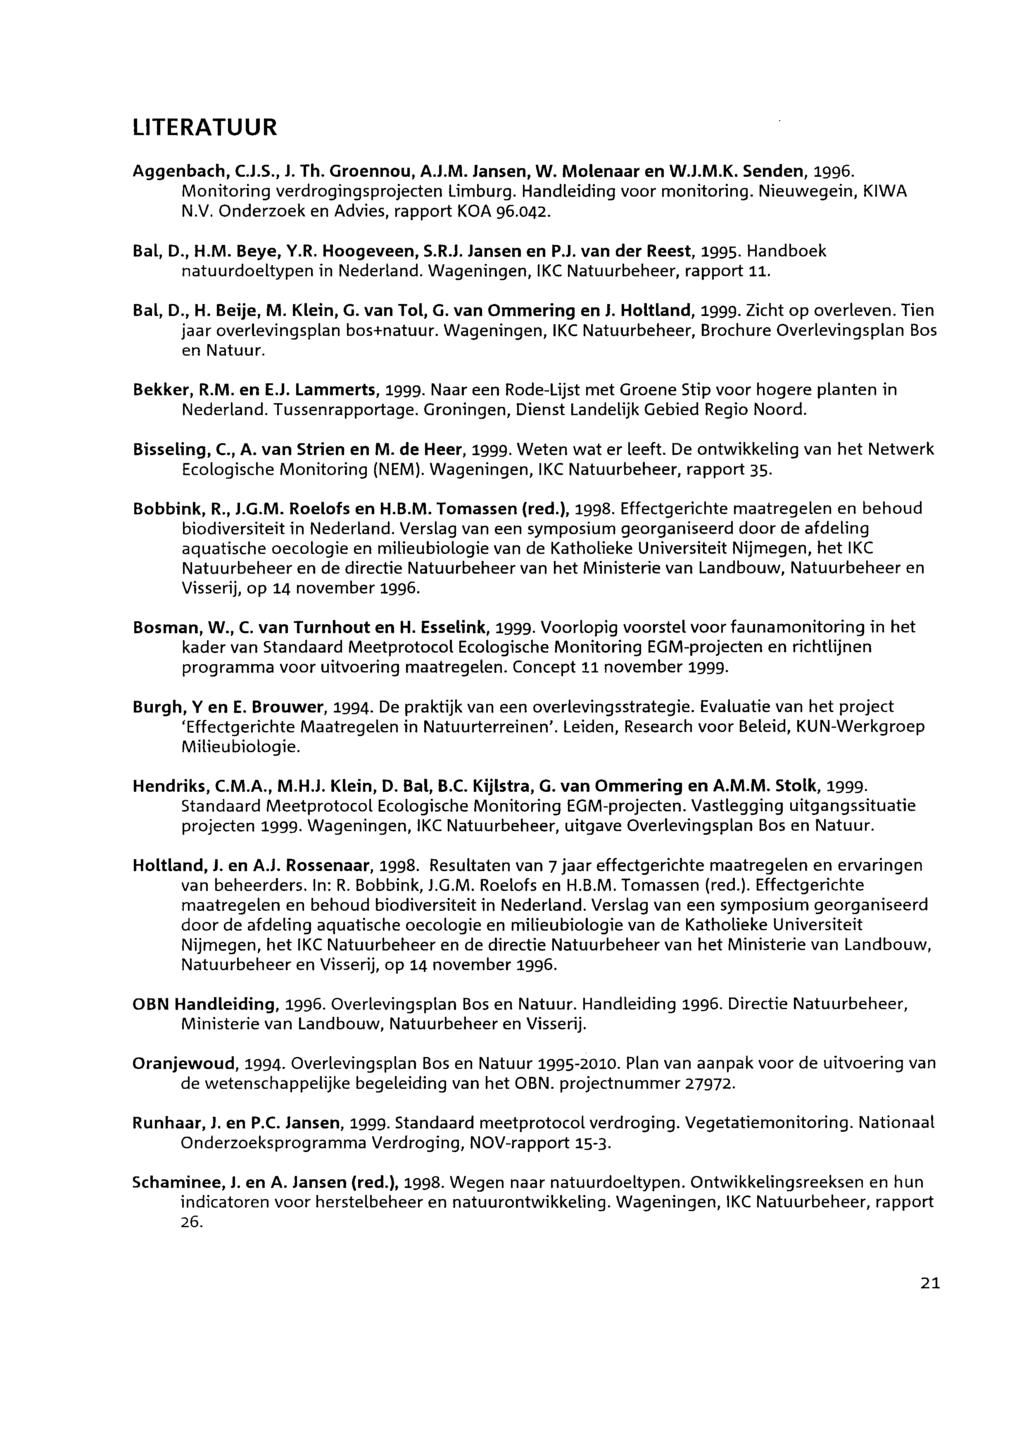 LITERATUUR Aggenbach, C.J.S., J. Th. Groennou, A.J.M. Jansen, W. Molenaar en W.J.M.K. Senden, 1996. Monitoring verdrogingsprojecten Limburg. Handleiding voor monitoring. Nieuwegein, KIWA N.V.